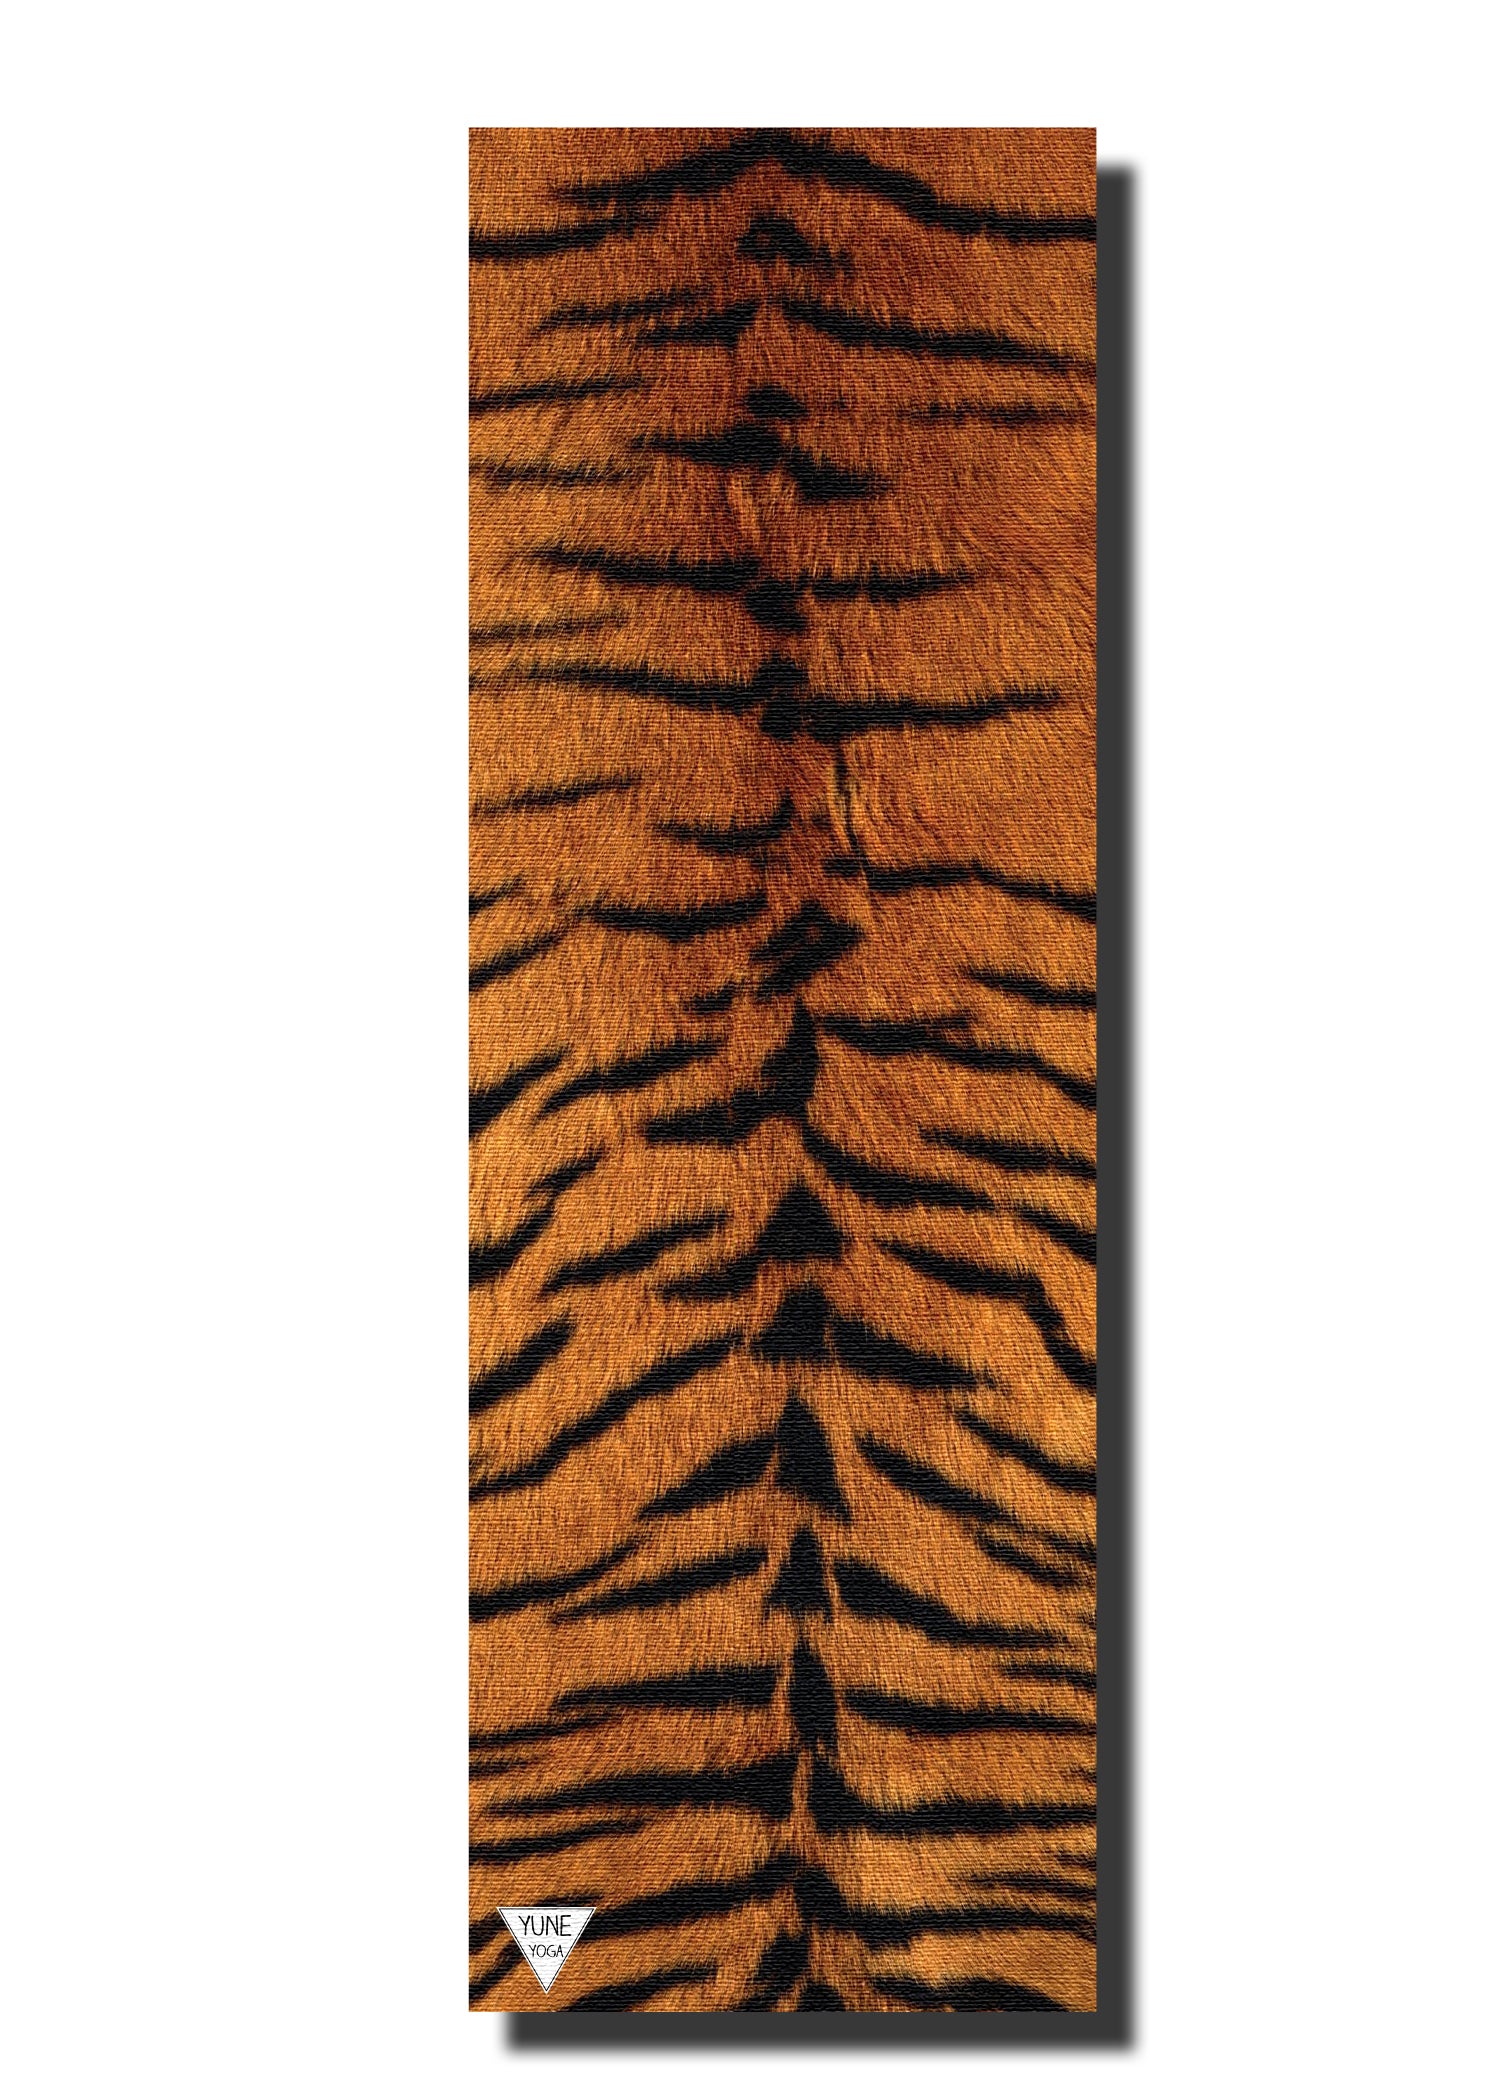 Yune Yoga Yune Yoga Mat Tiger 5mm on Marmalade